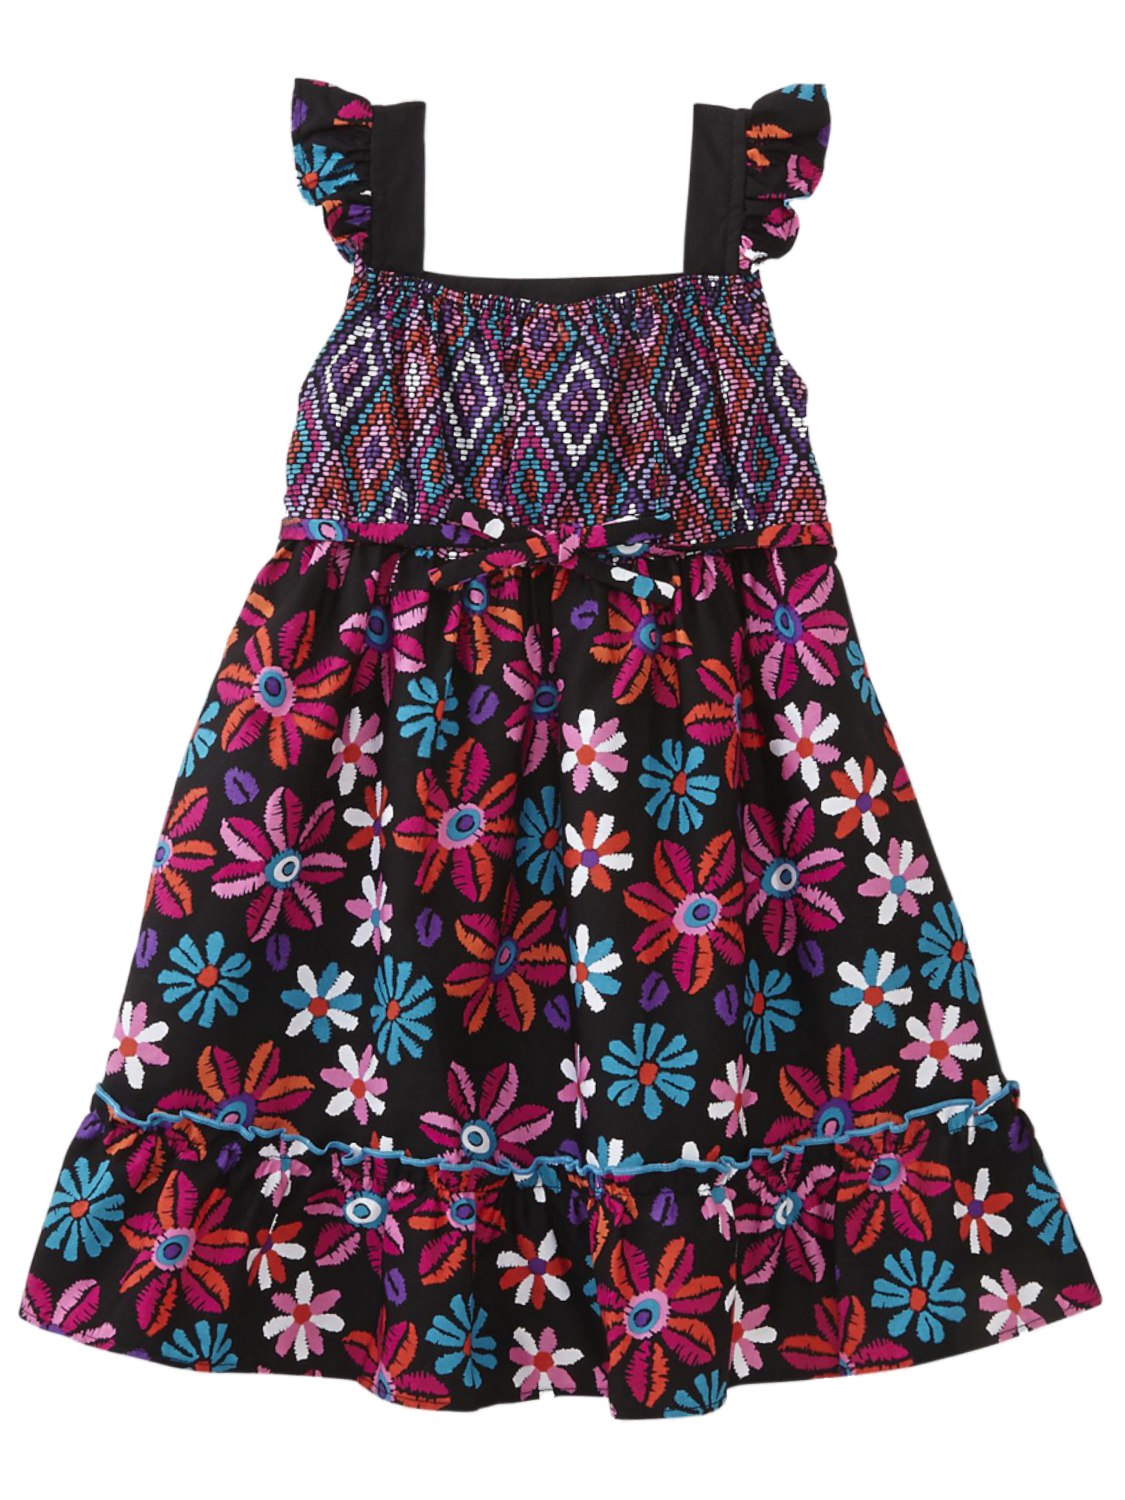 Youngland Toddler Girls Black & Pink Floral Dress Cotton Sundress 3T